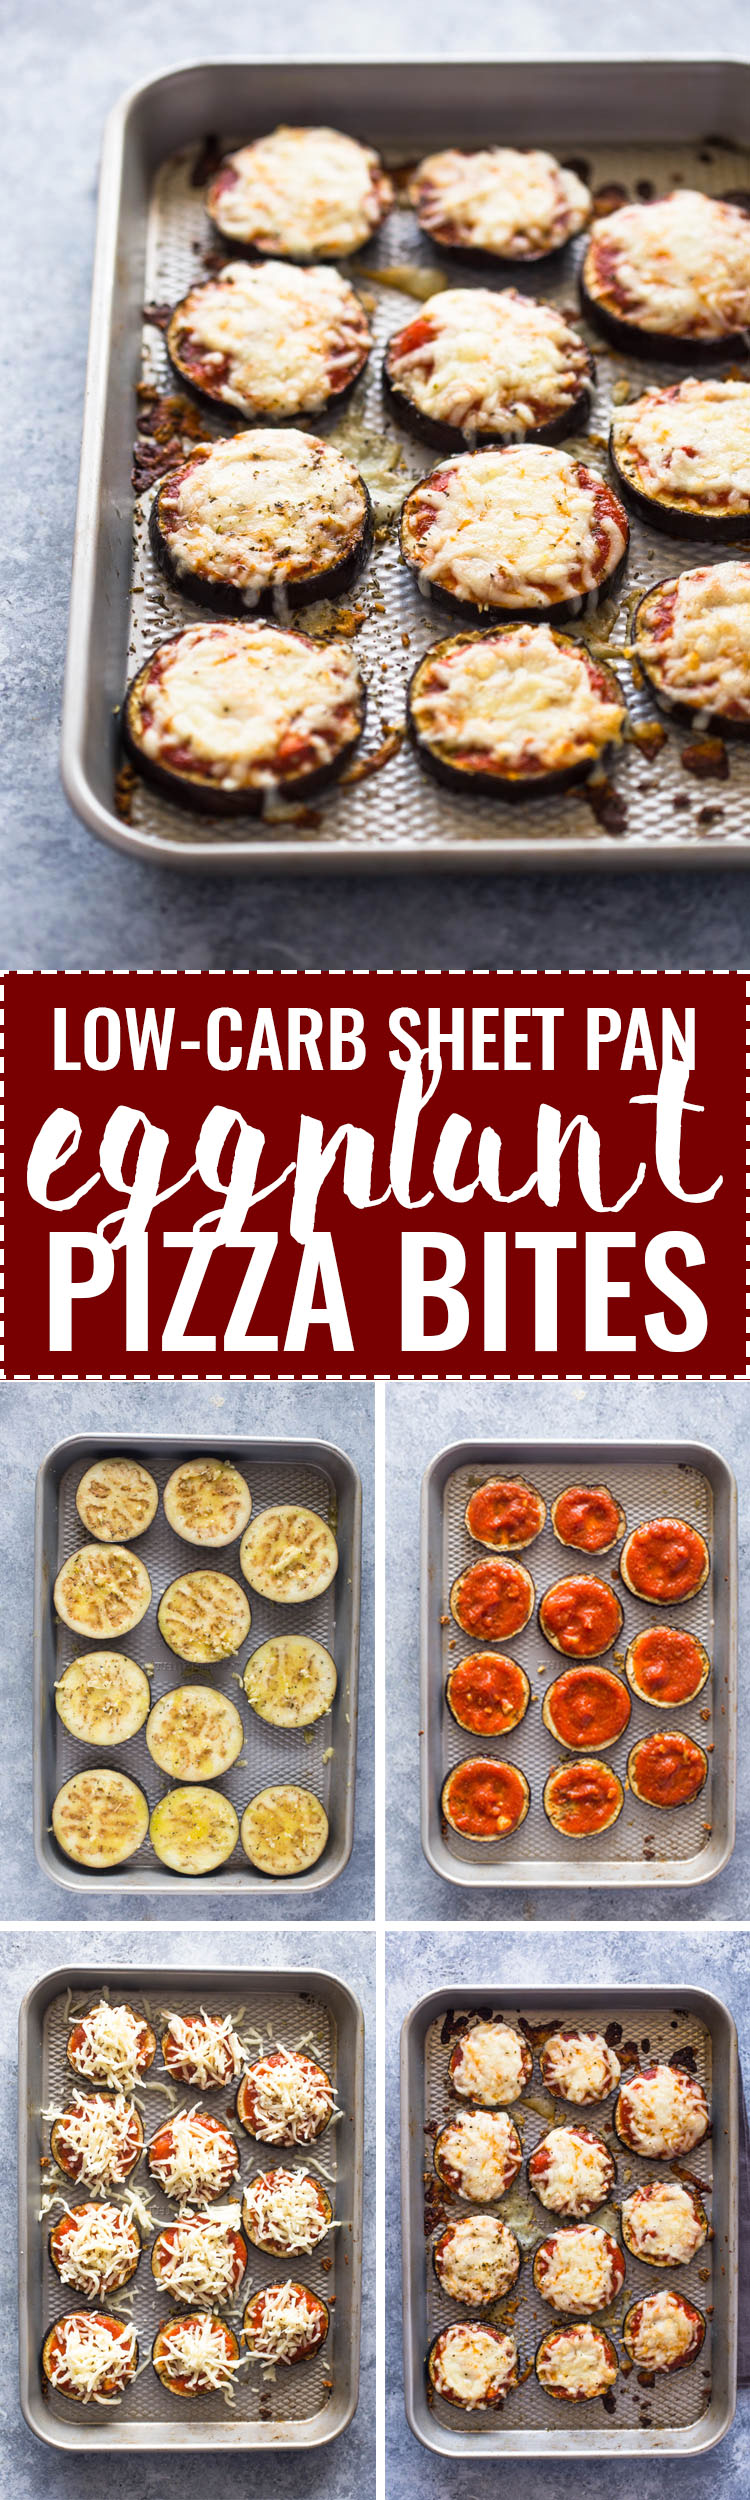 Low-Carb Eggplant Pizza Bites